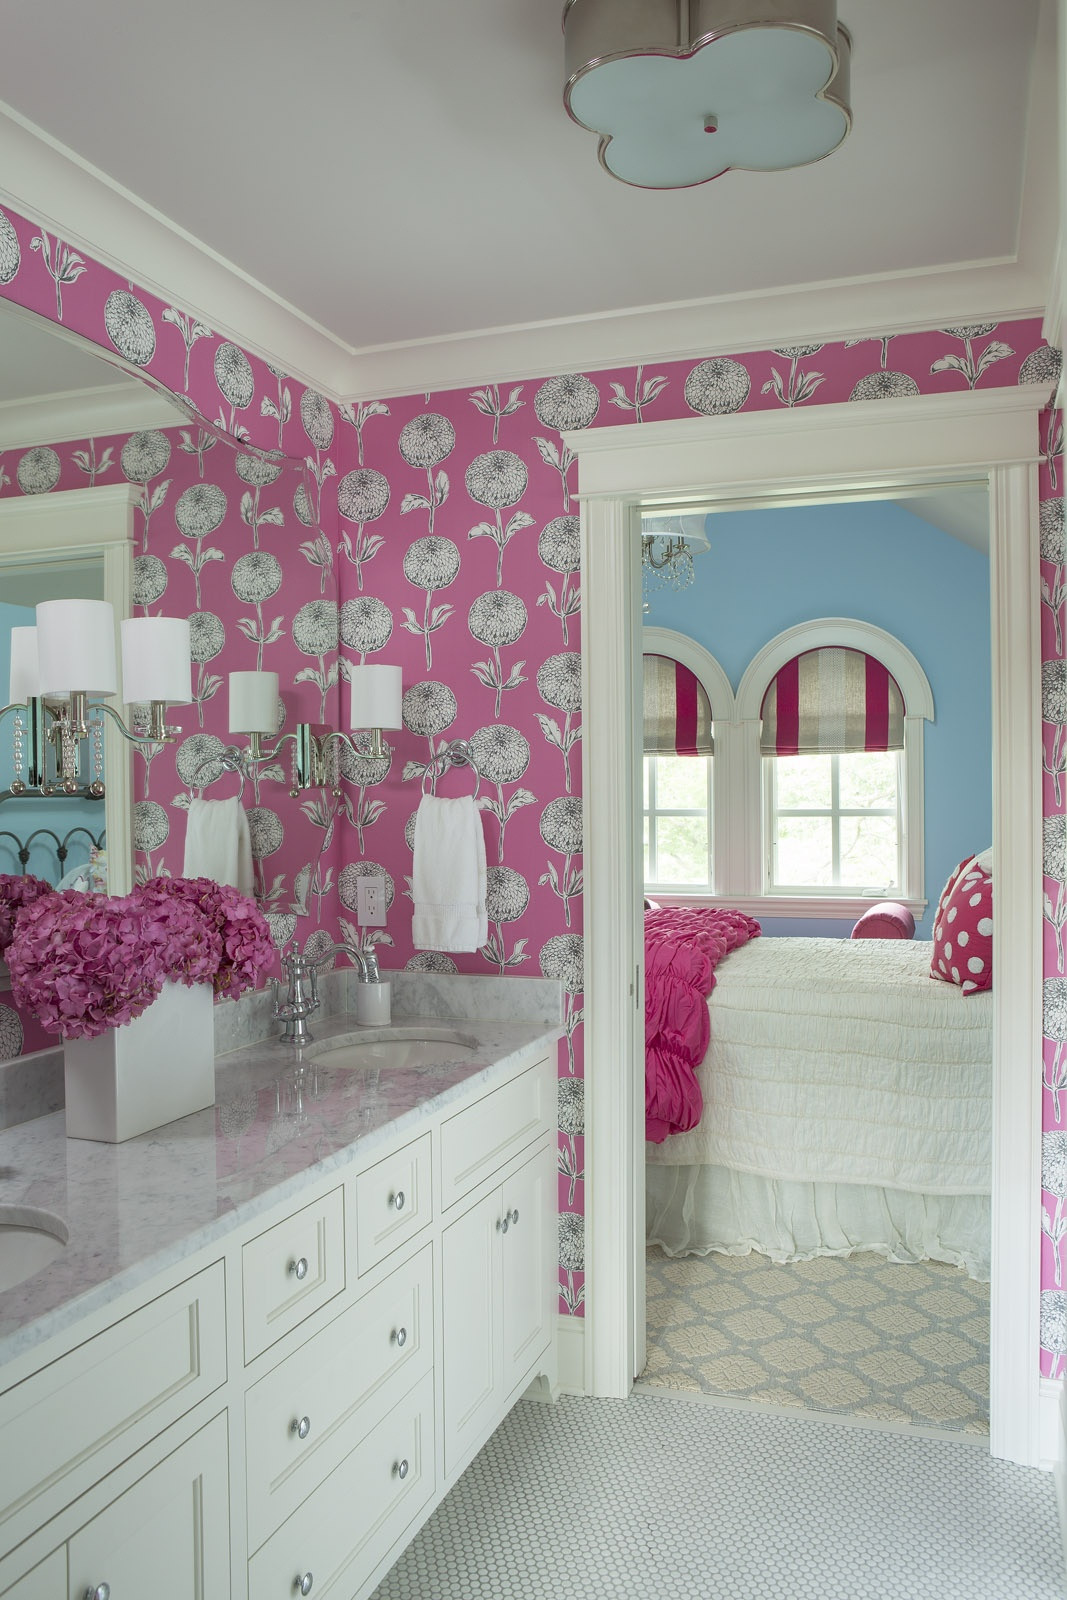 Bathroom Wallpaper Designs
 15 Reasons To Love Bathroom Wallpaper